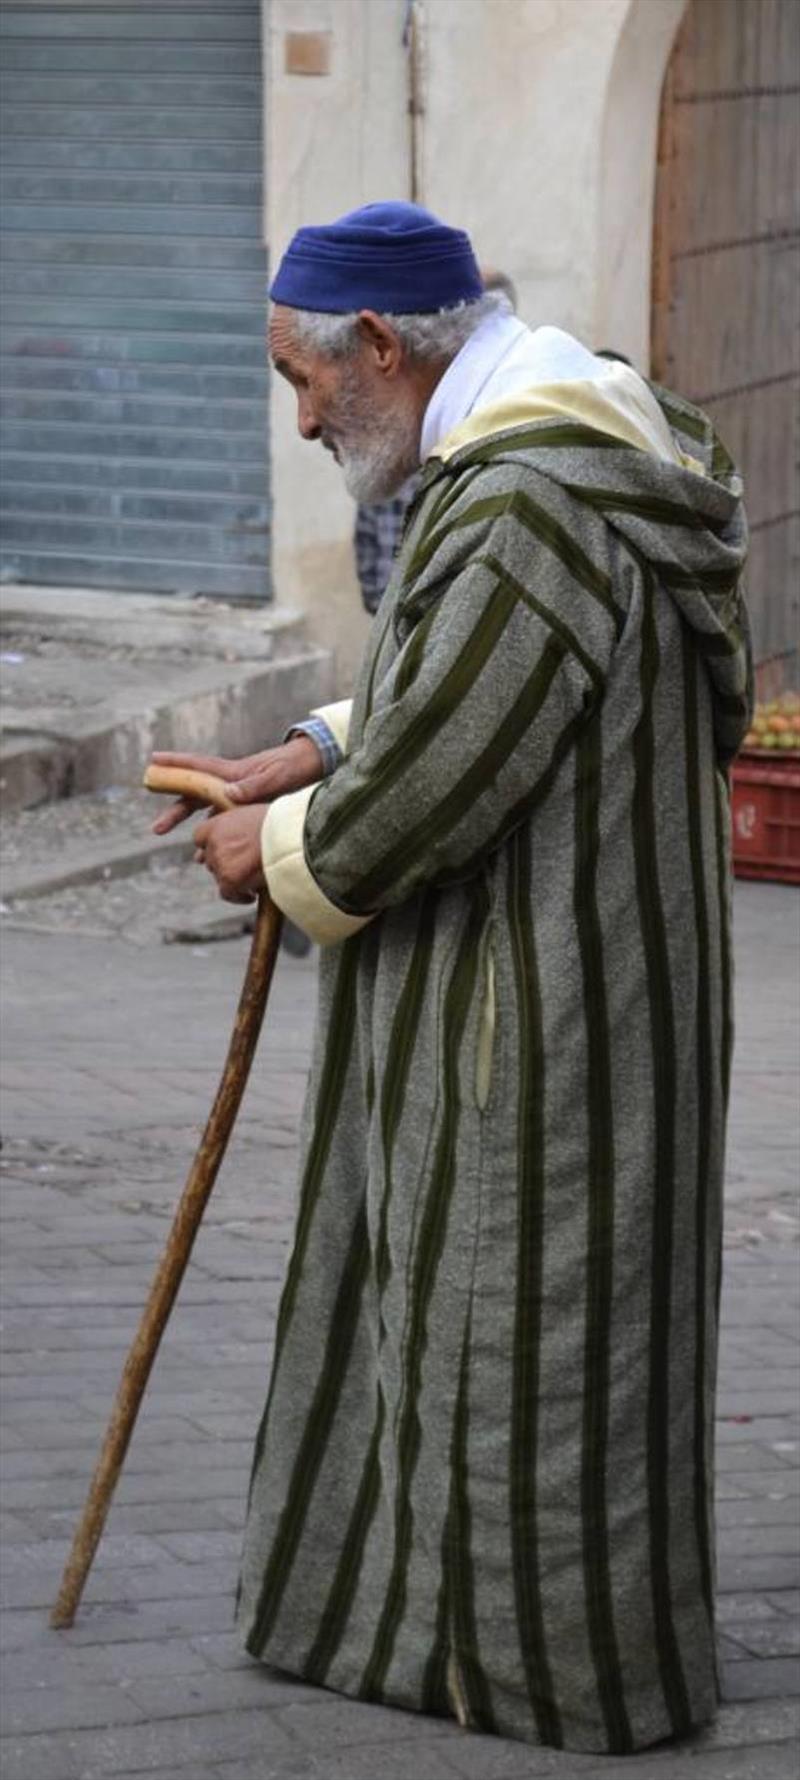 An old man in Kasbah photo copyright SV Red Roo taken at 